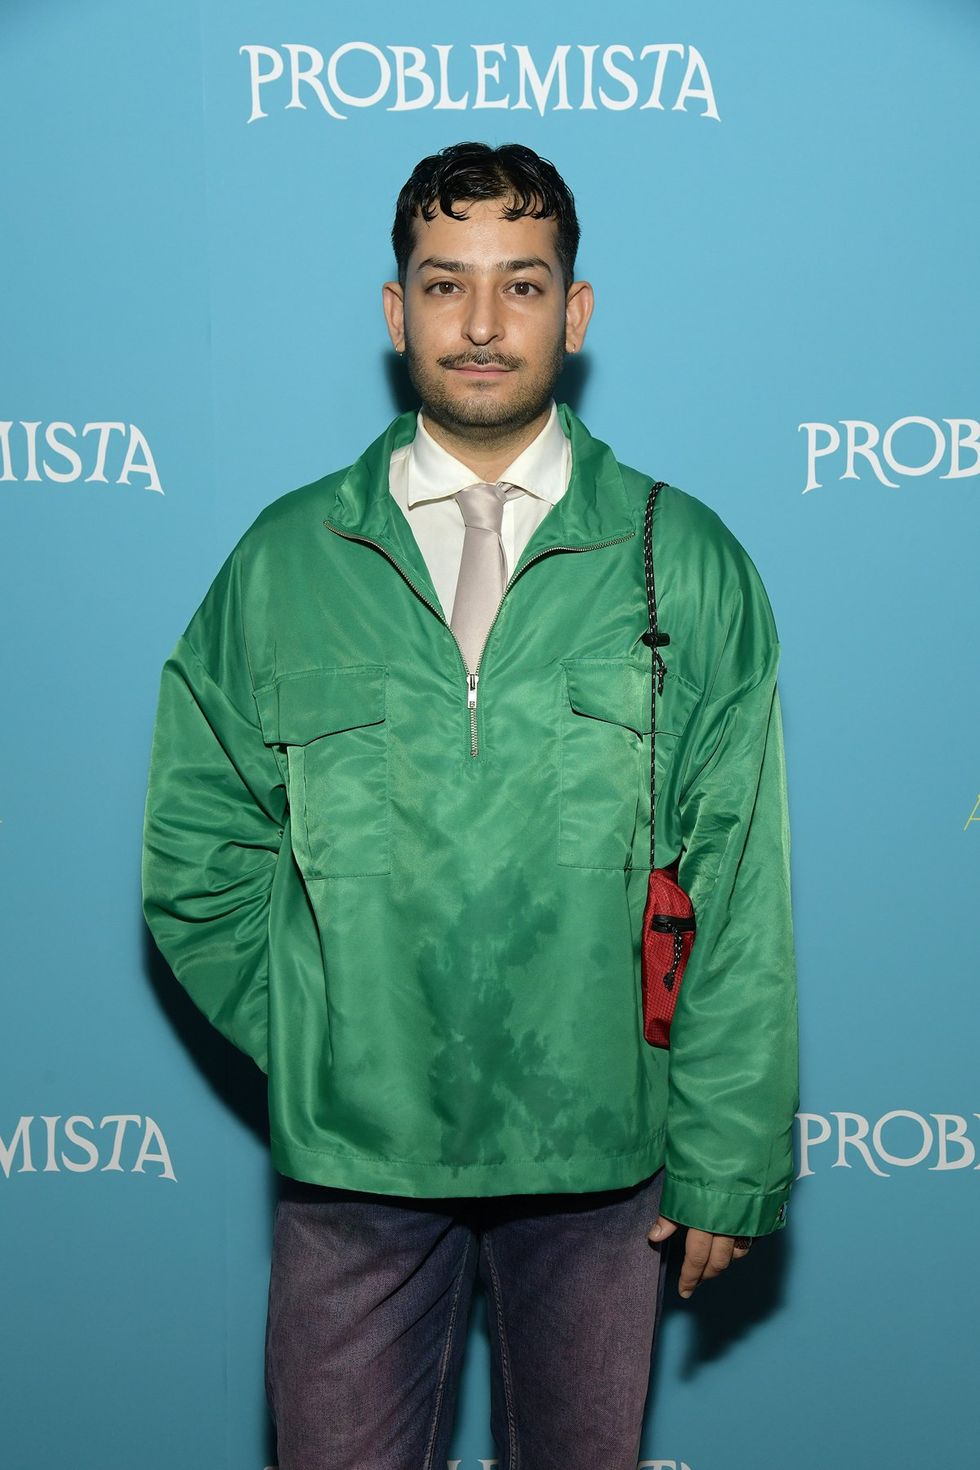 Photo Gallery NYC Premiere of Problemista